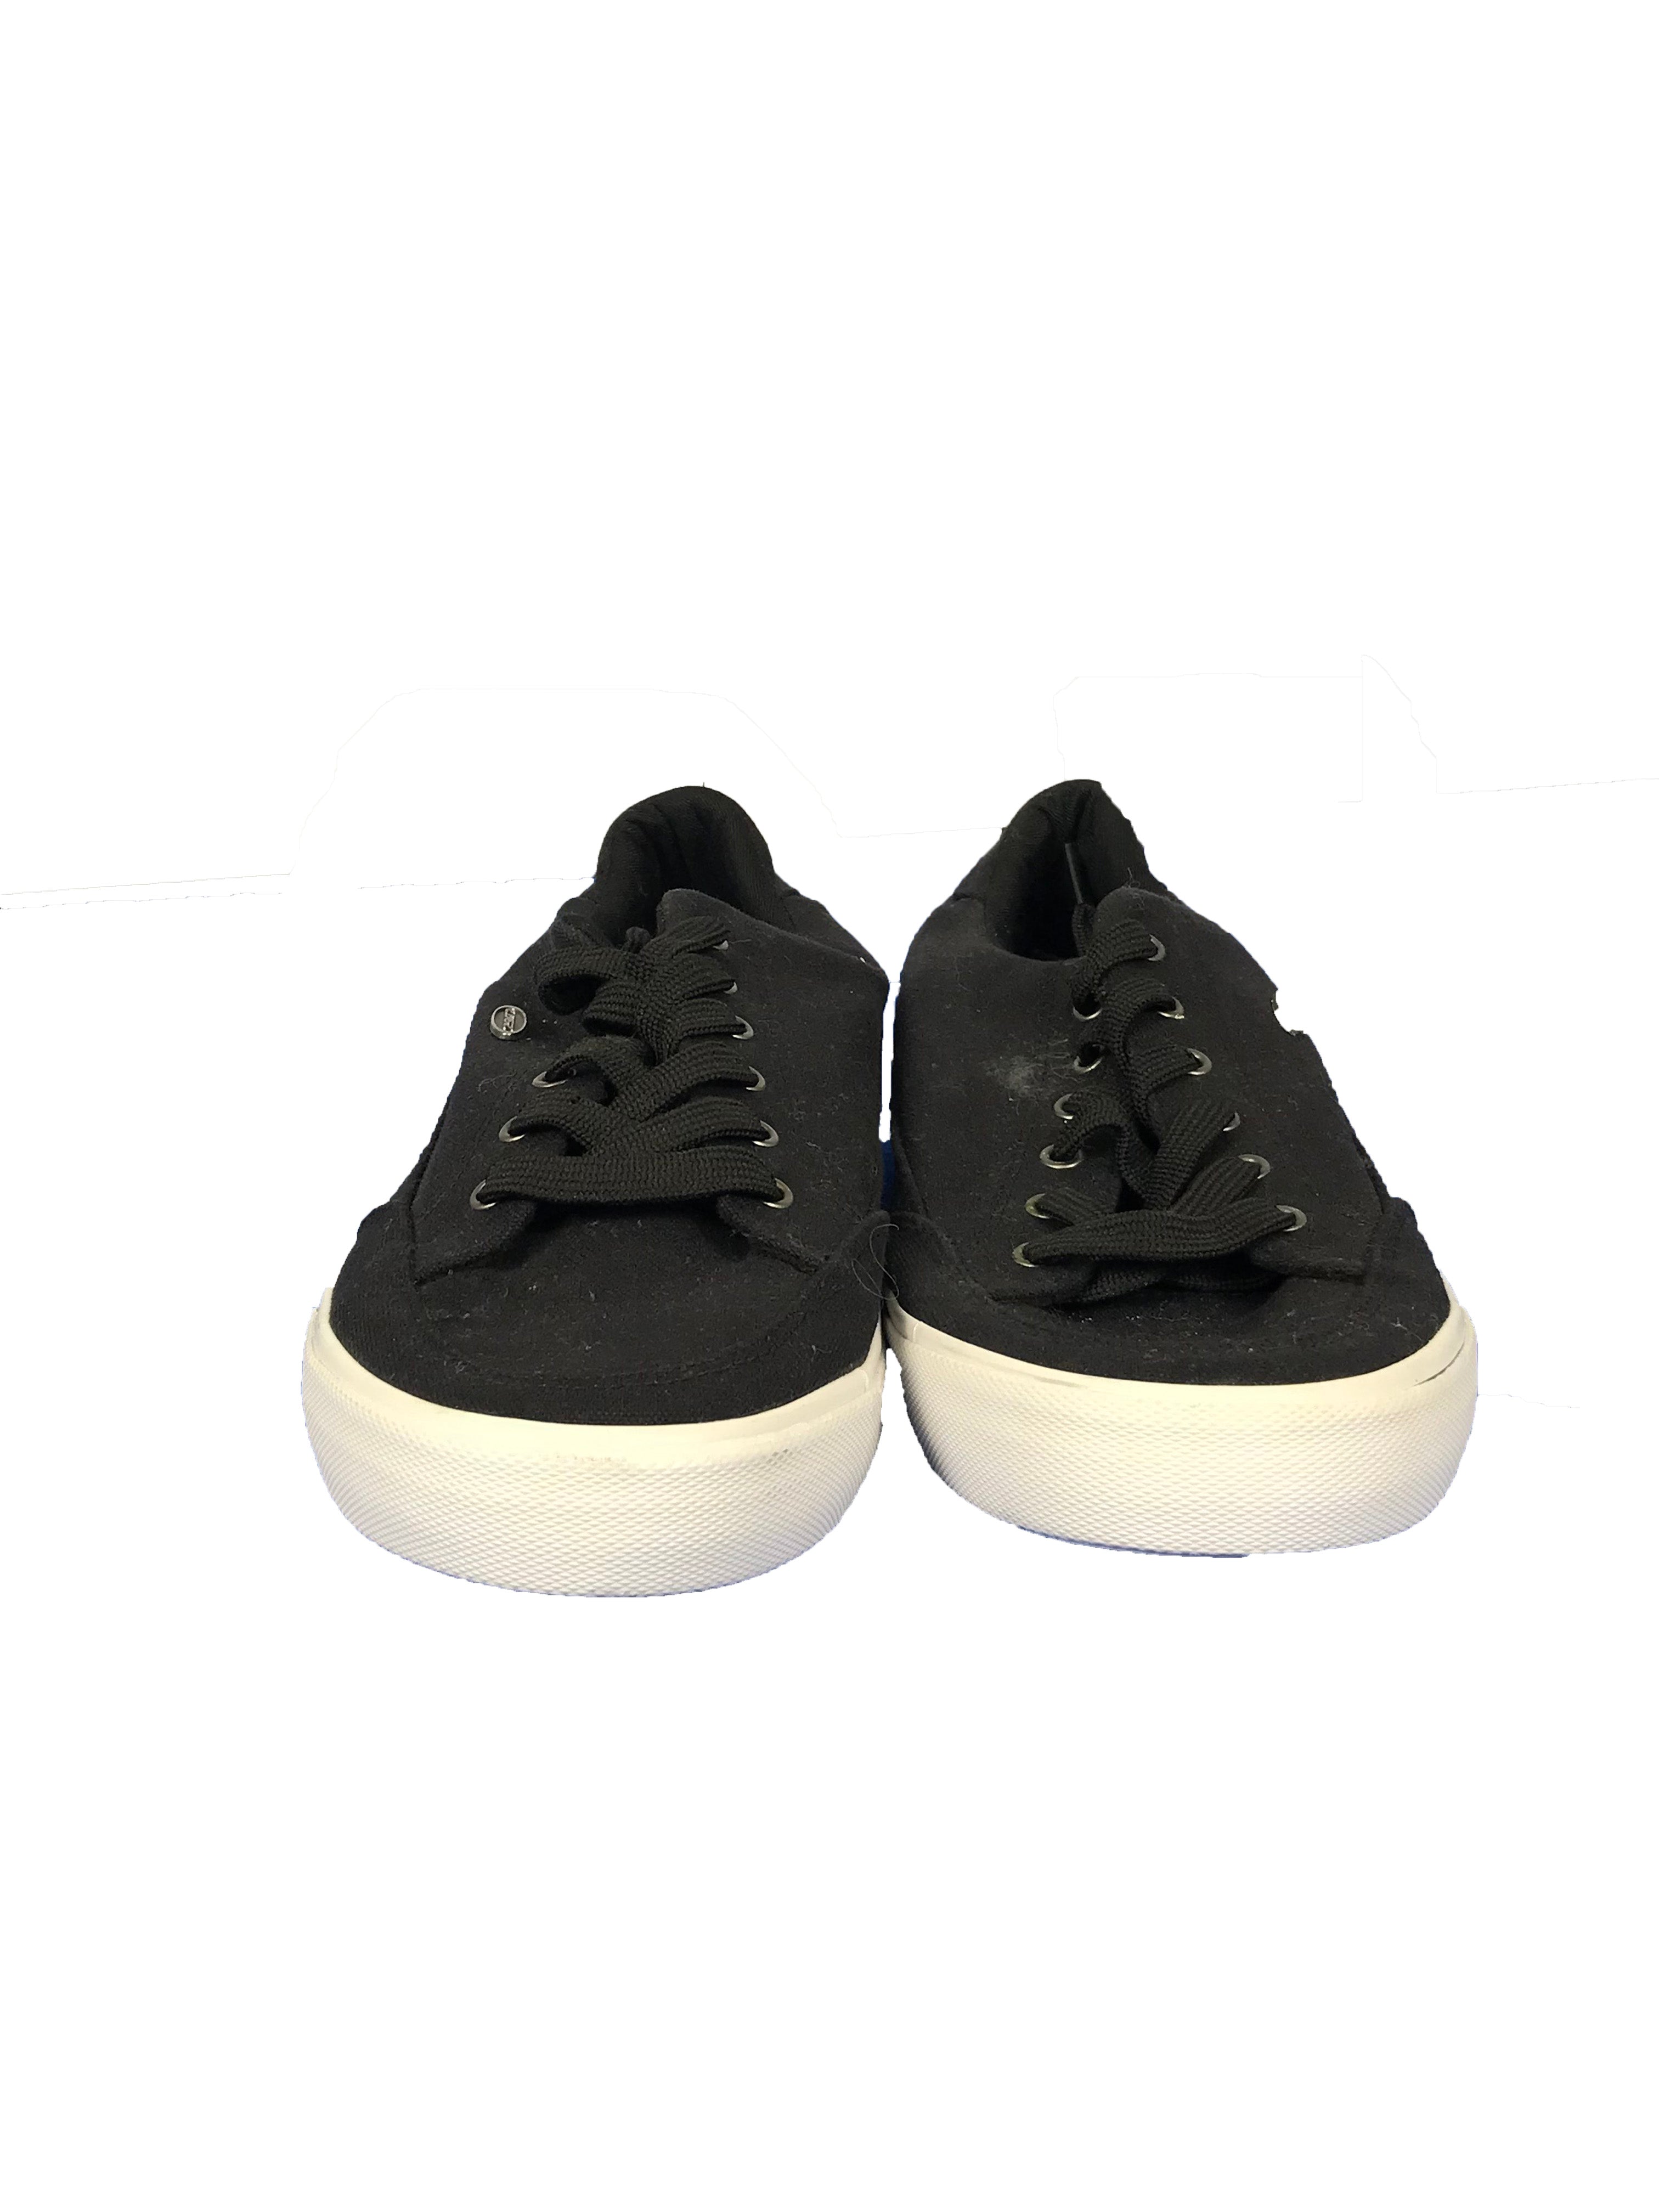 Lugz Black Low Top Canvas Sneakers Men's Size 10.5